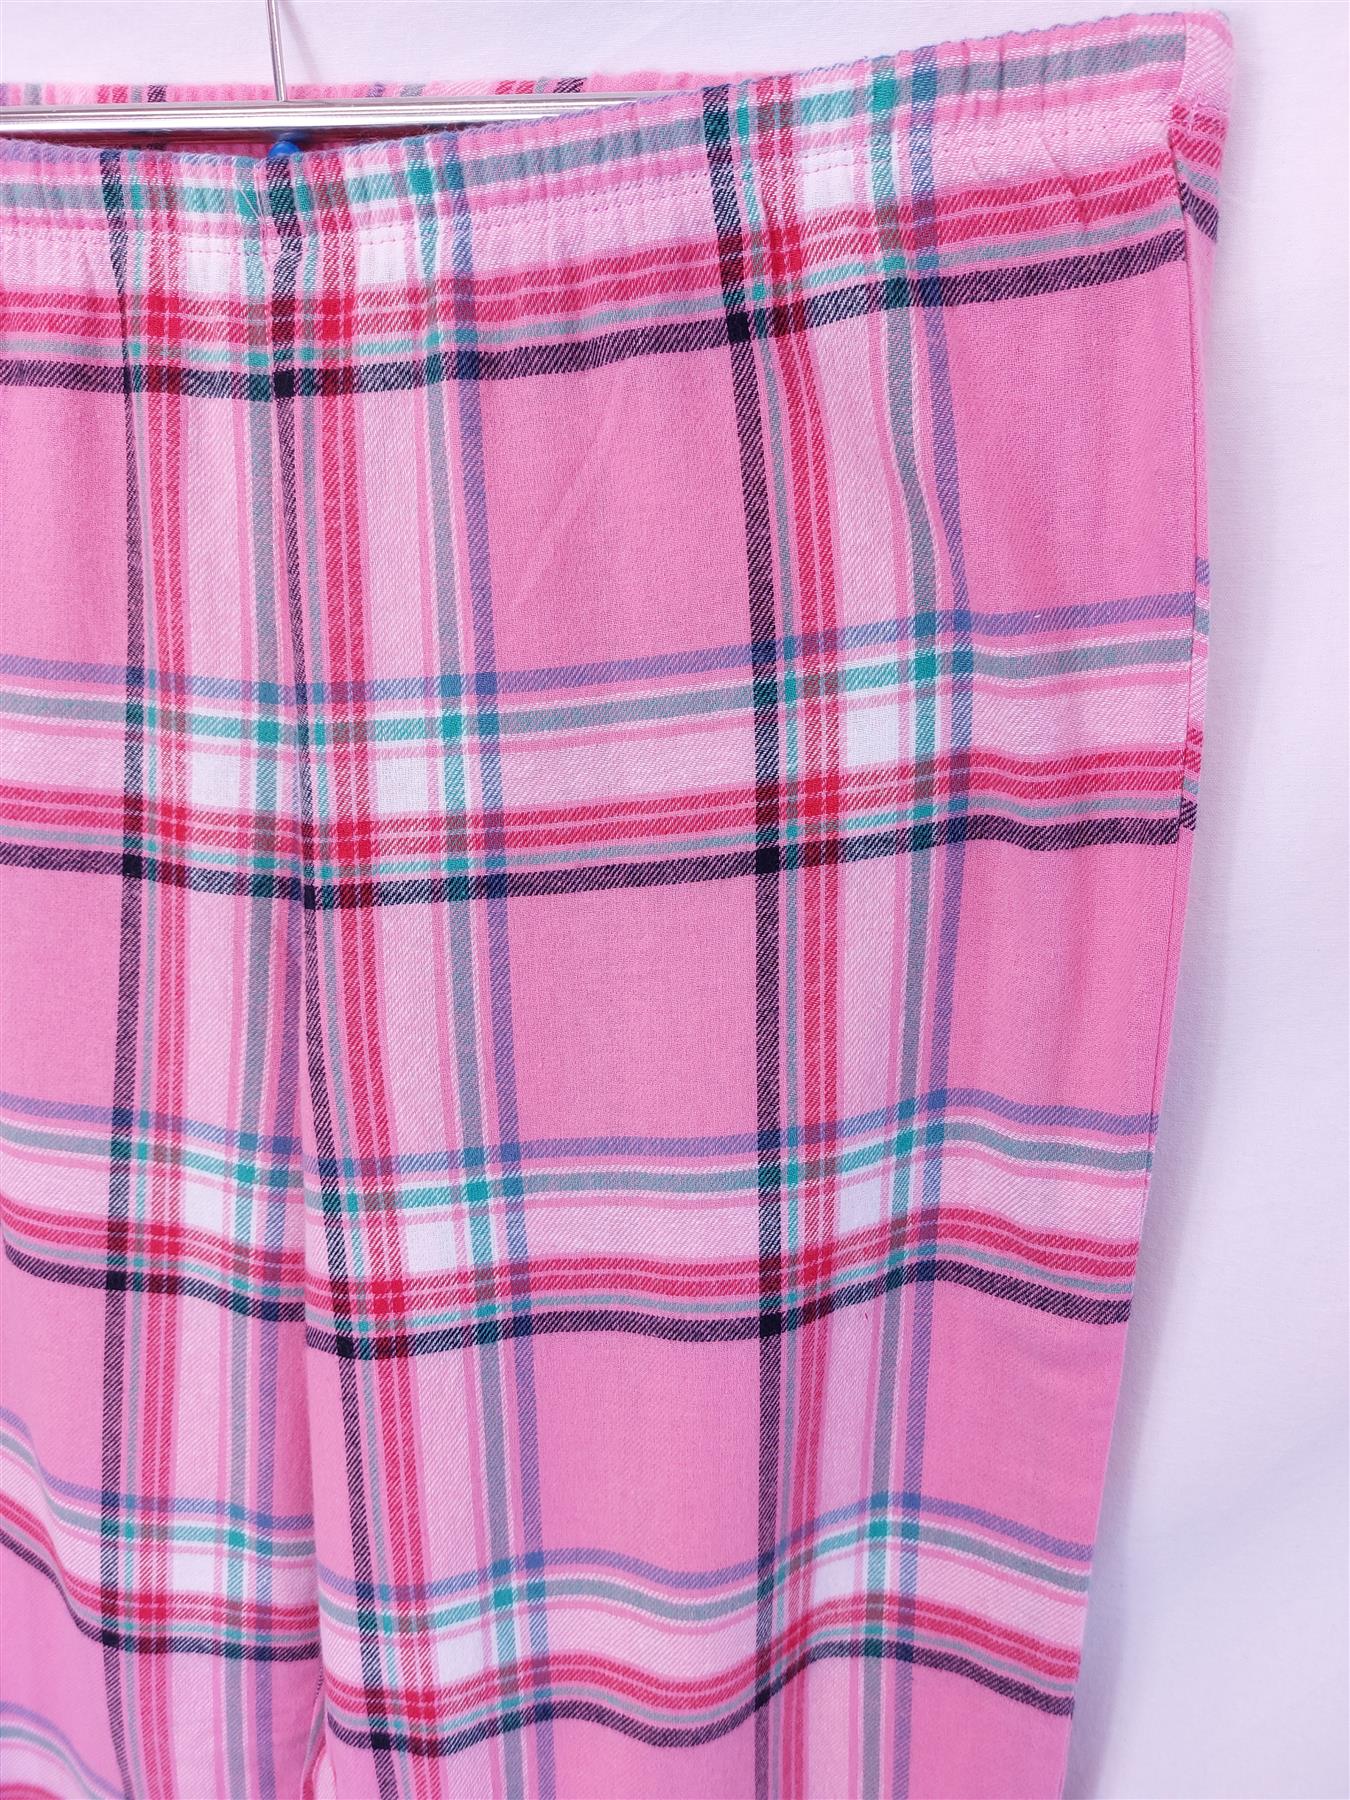 Pure Cotton Pyjama Bottoms Women's Pink Check Size 10 Ex-Chainstore Brand New PJ